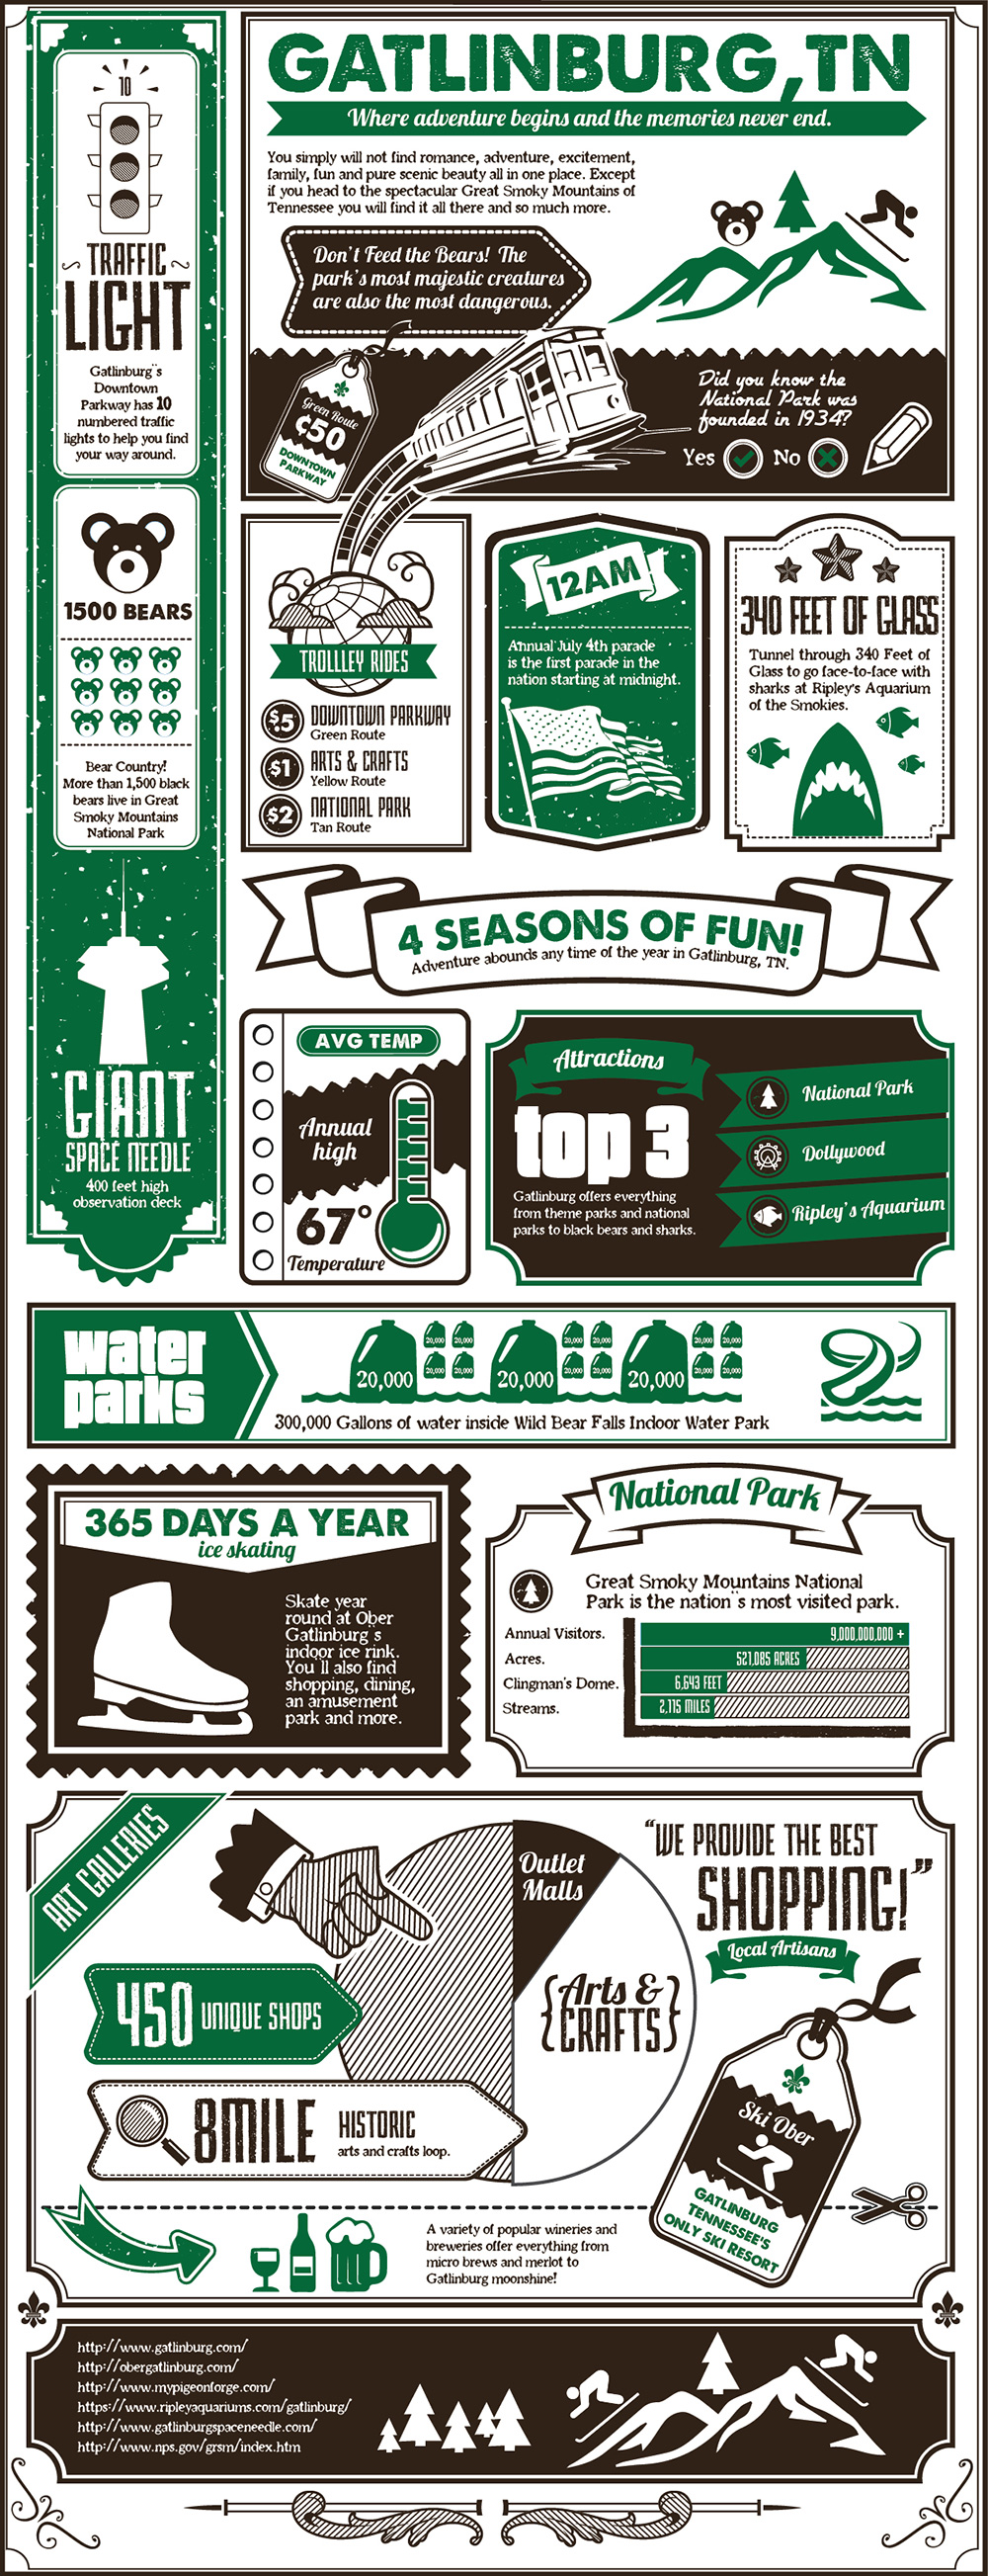 Gatlinburg Fun Facts Infographic